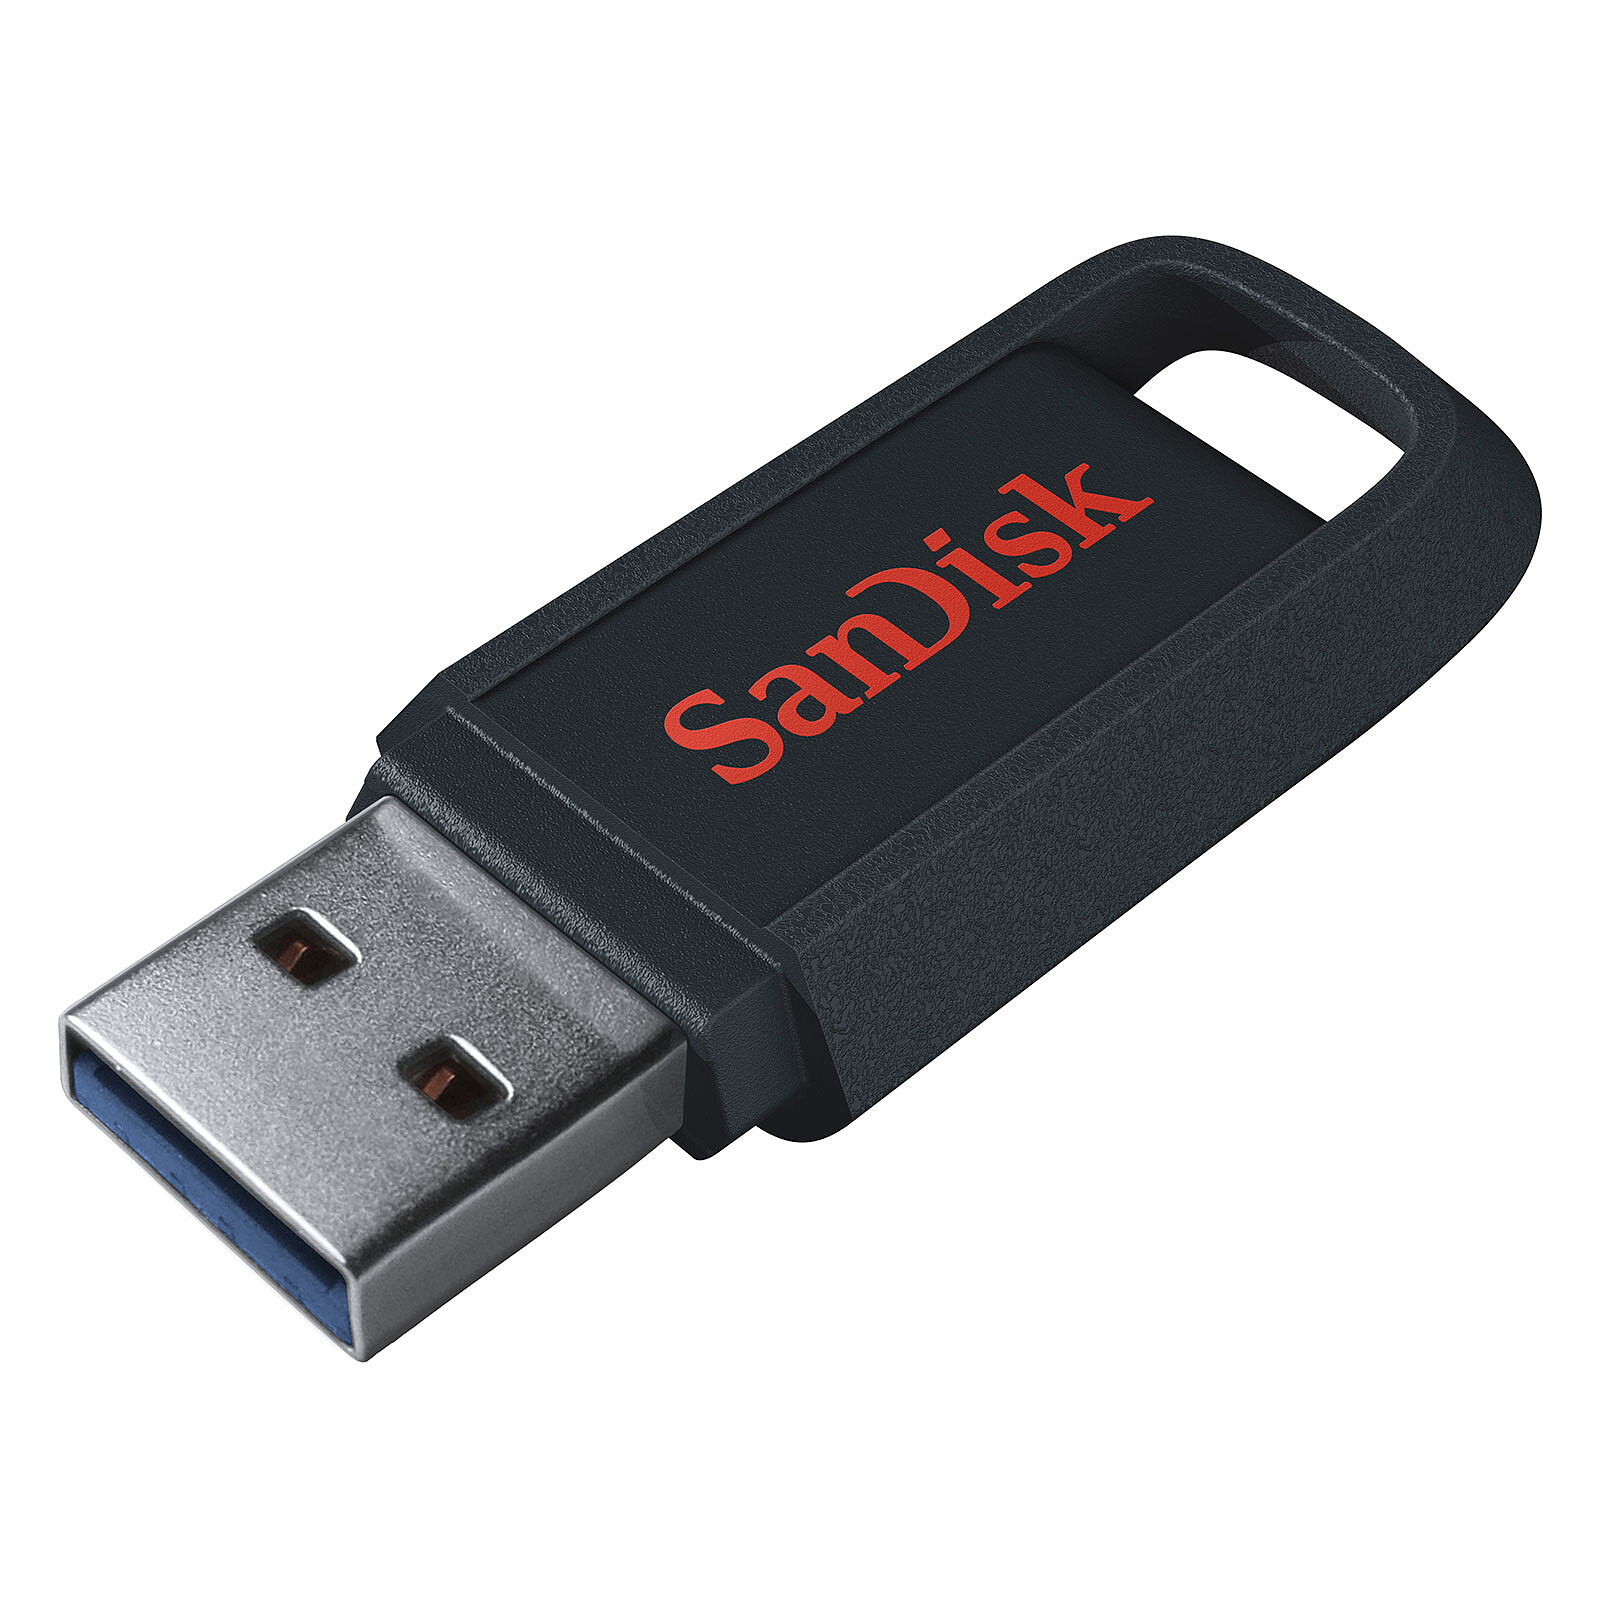 Usb флеш 128 гб. Флешка SANDISK 64 GB USB 3.0. USB флешка 64 GB SANDISK. Флеш накопитель 64gb SANDISK. SANDISK 128gb USB 3.